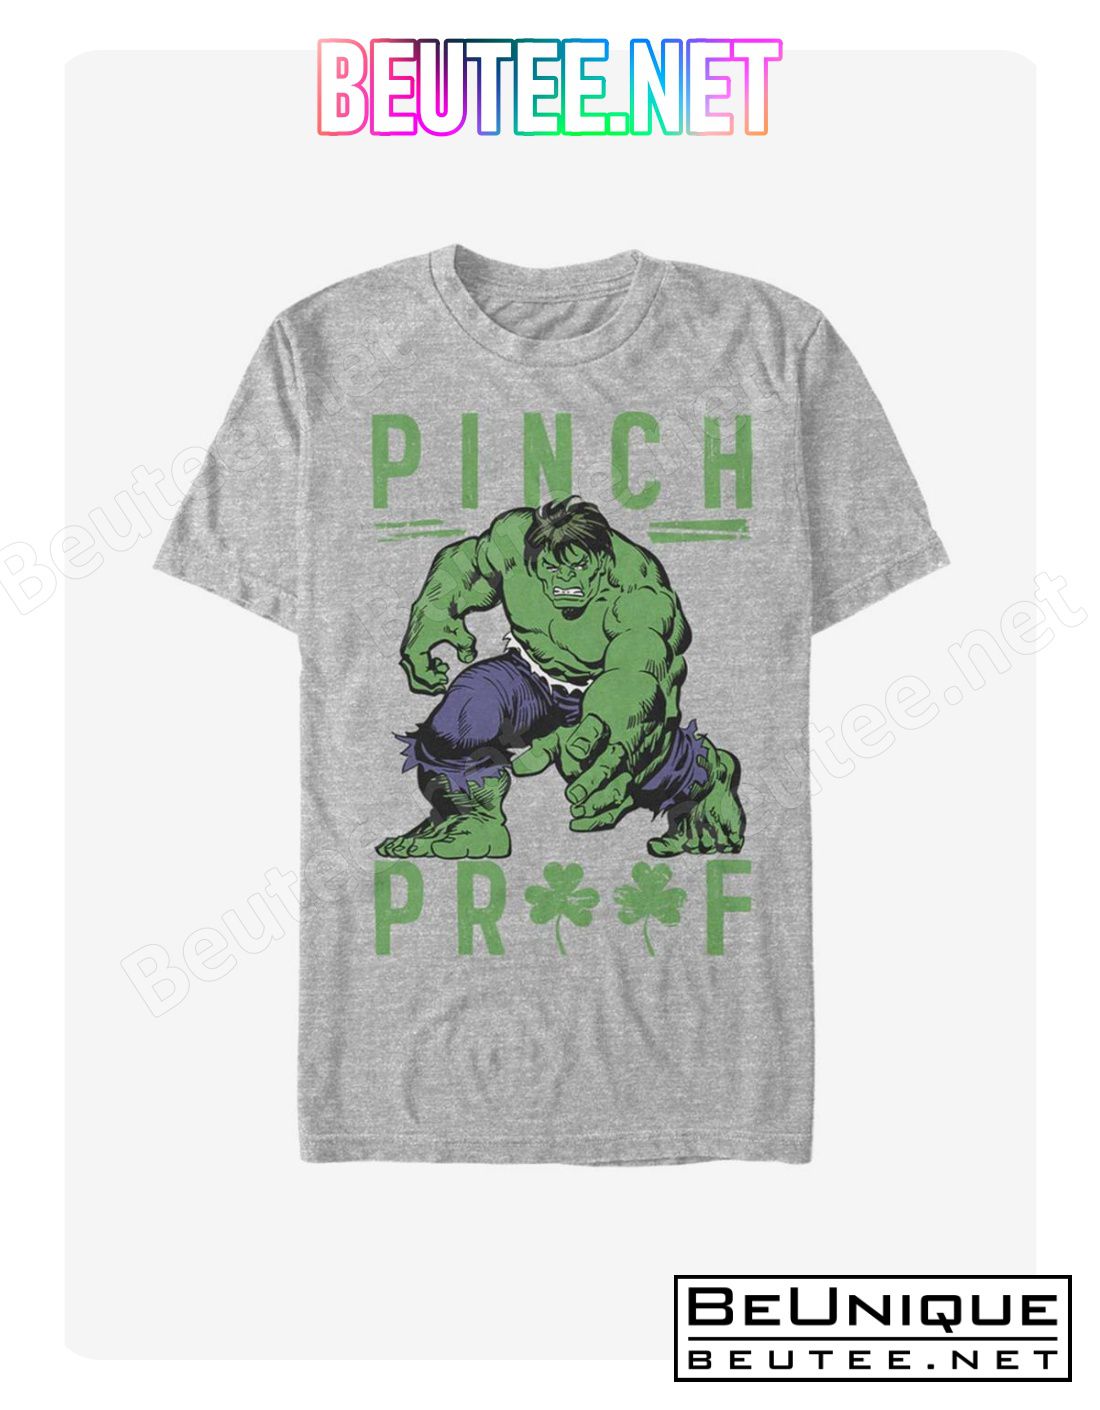 Marvel Hulk Green Pinch T-Shirt